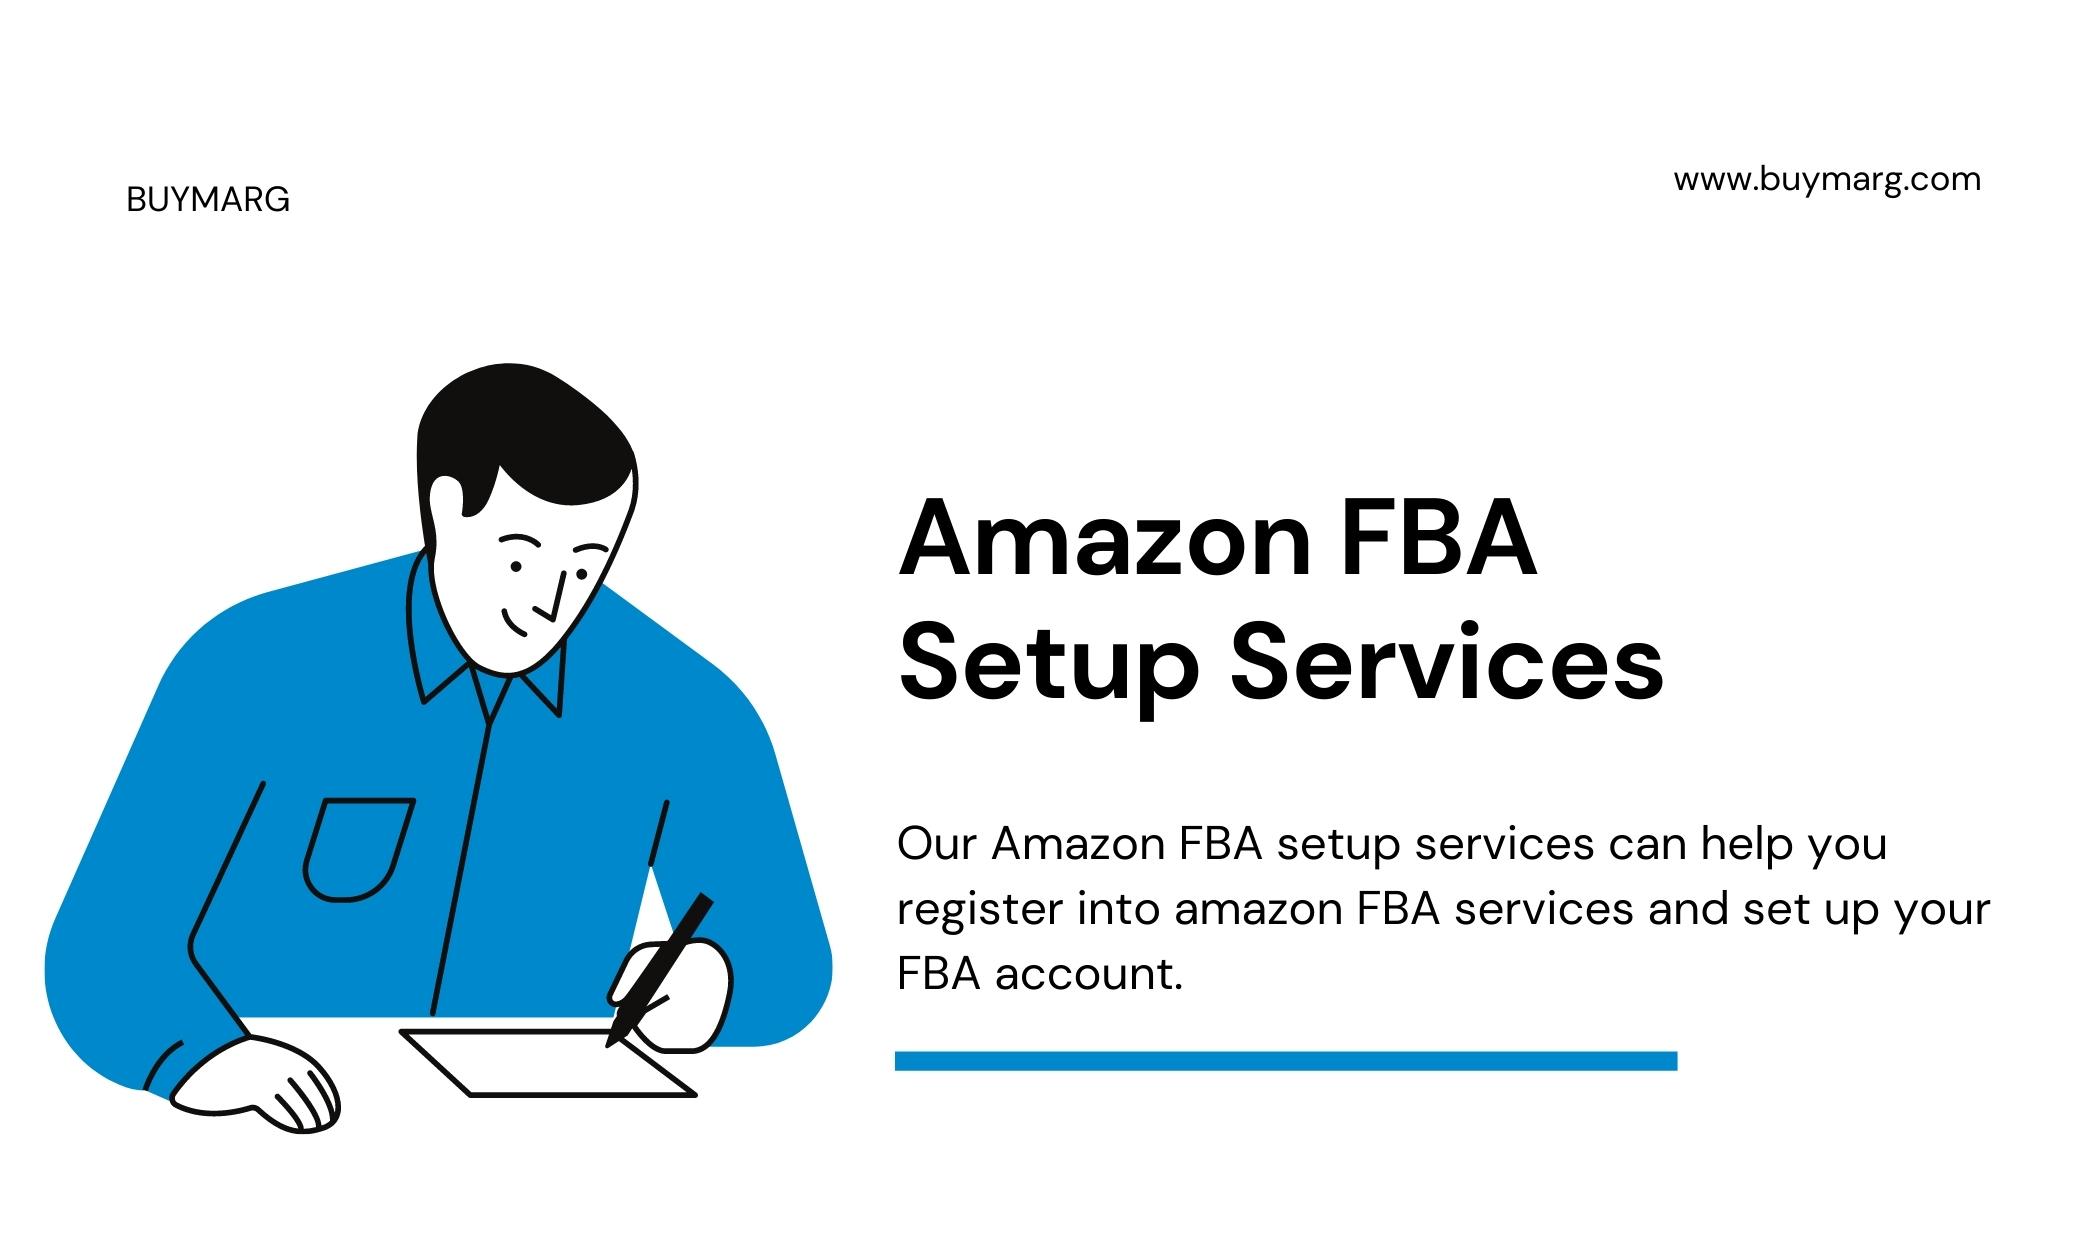 Amazon FBA Setup Services